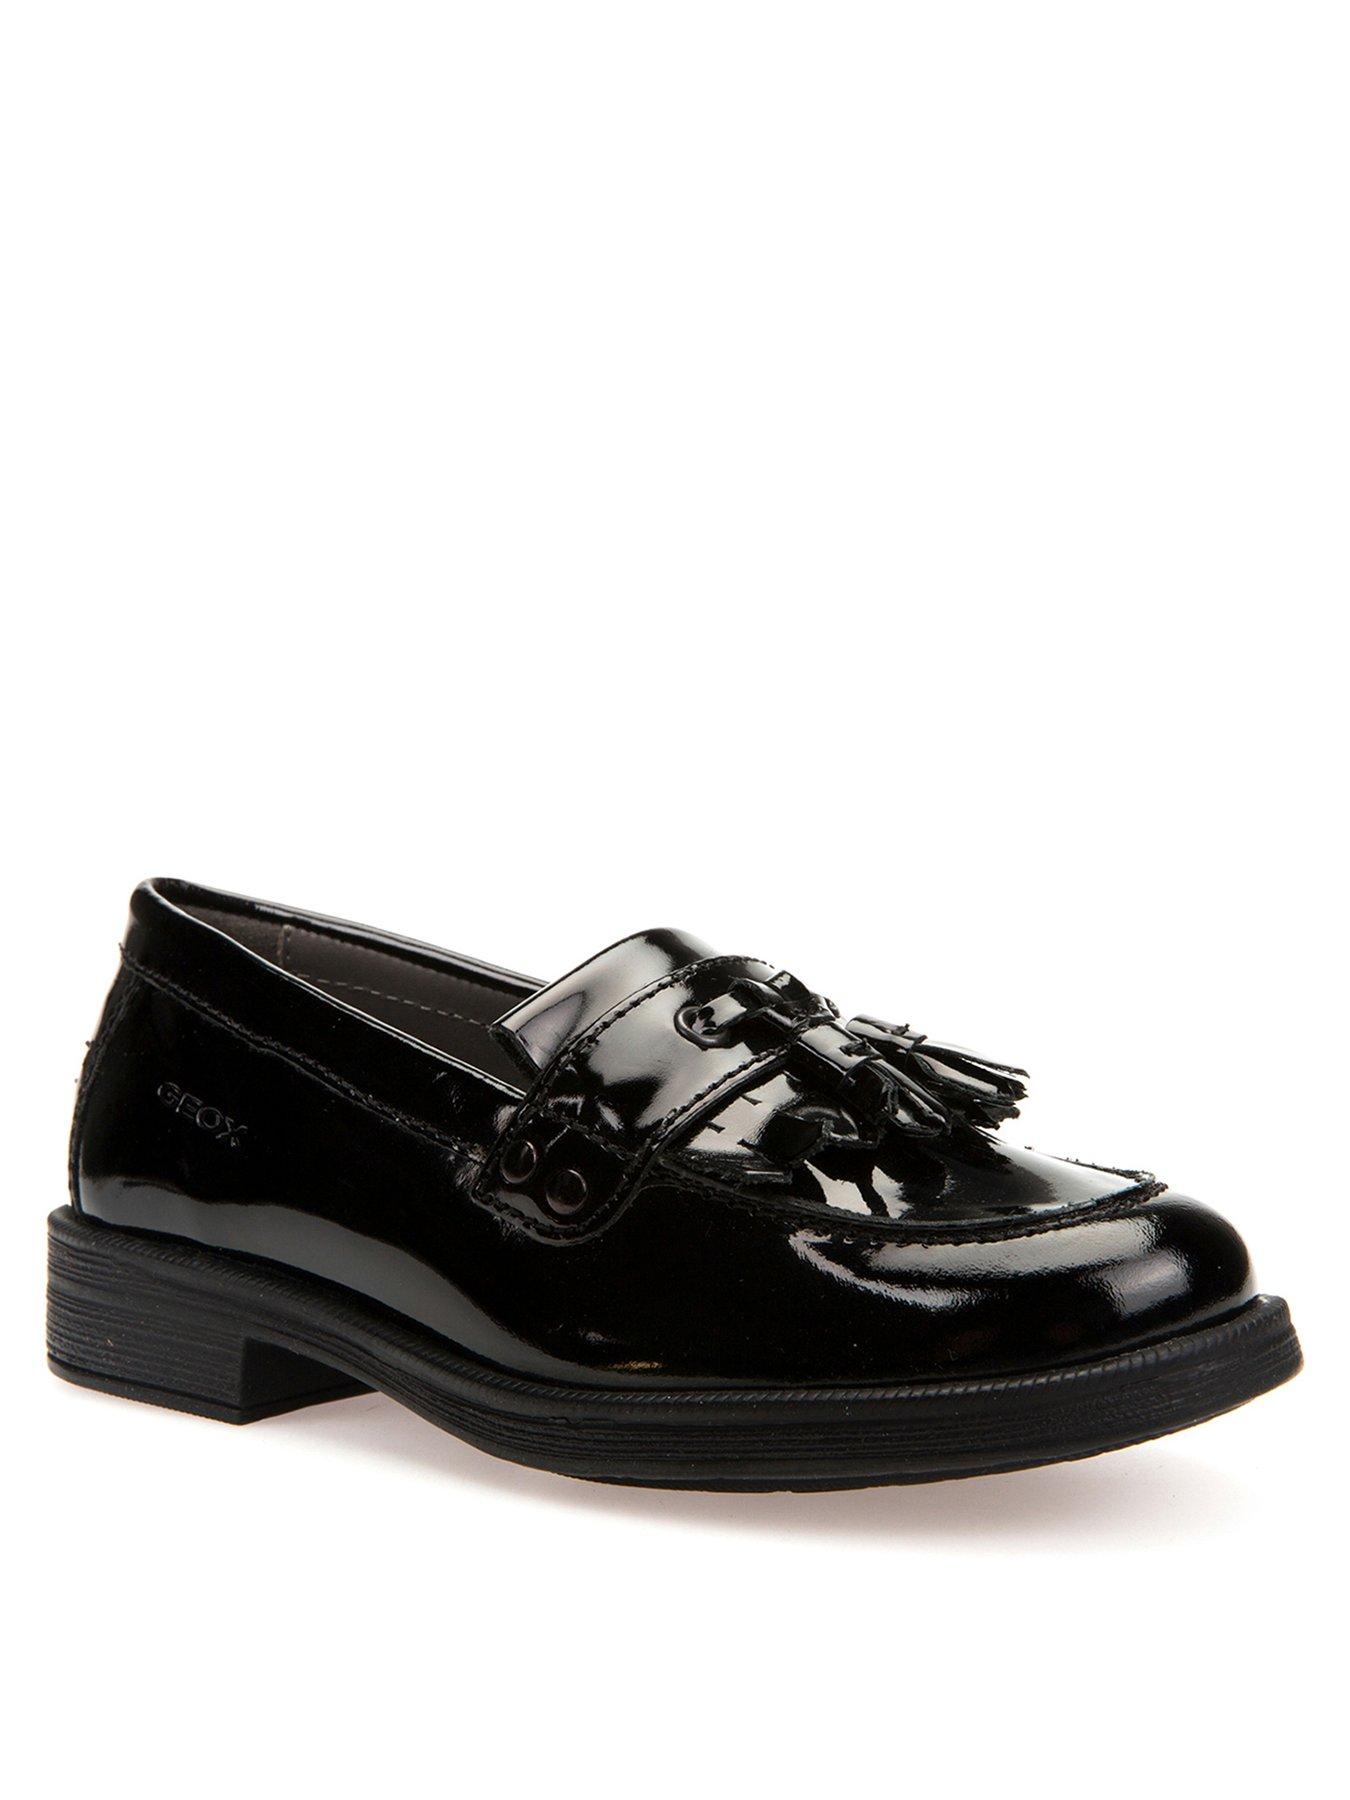  Girls Agata Patent School Shoe - Black